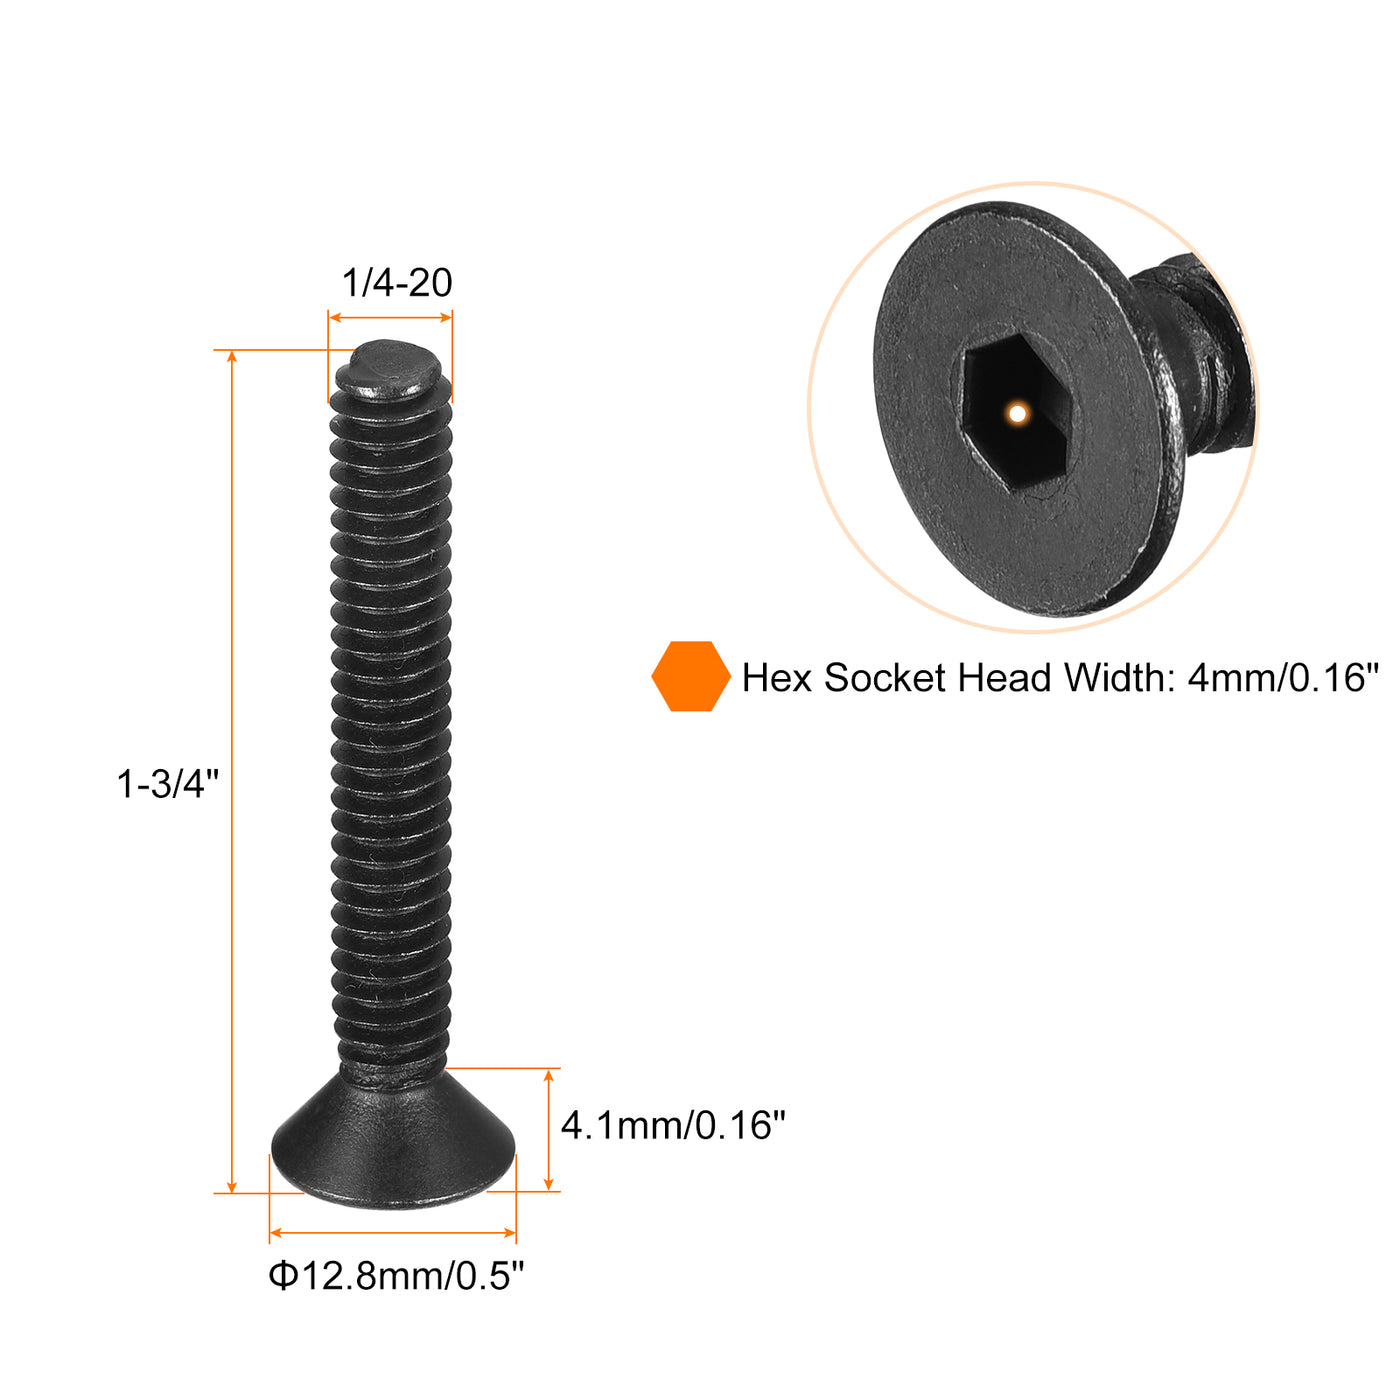 uxcell Uxcell 1/4-20x1-3/4" Flat Head Socket Cap Screws, 10.9 Grade Carbon Steel, 20PCS